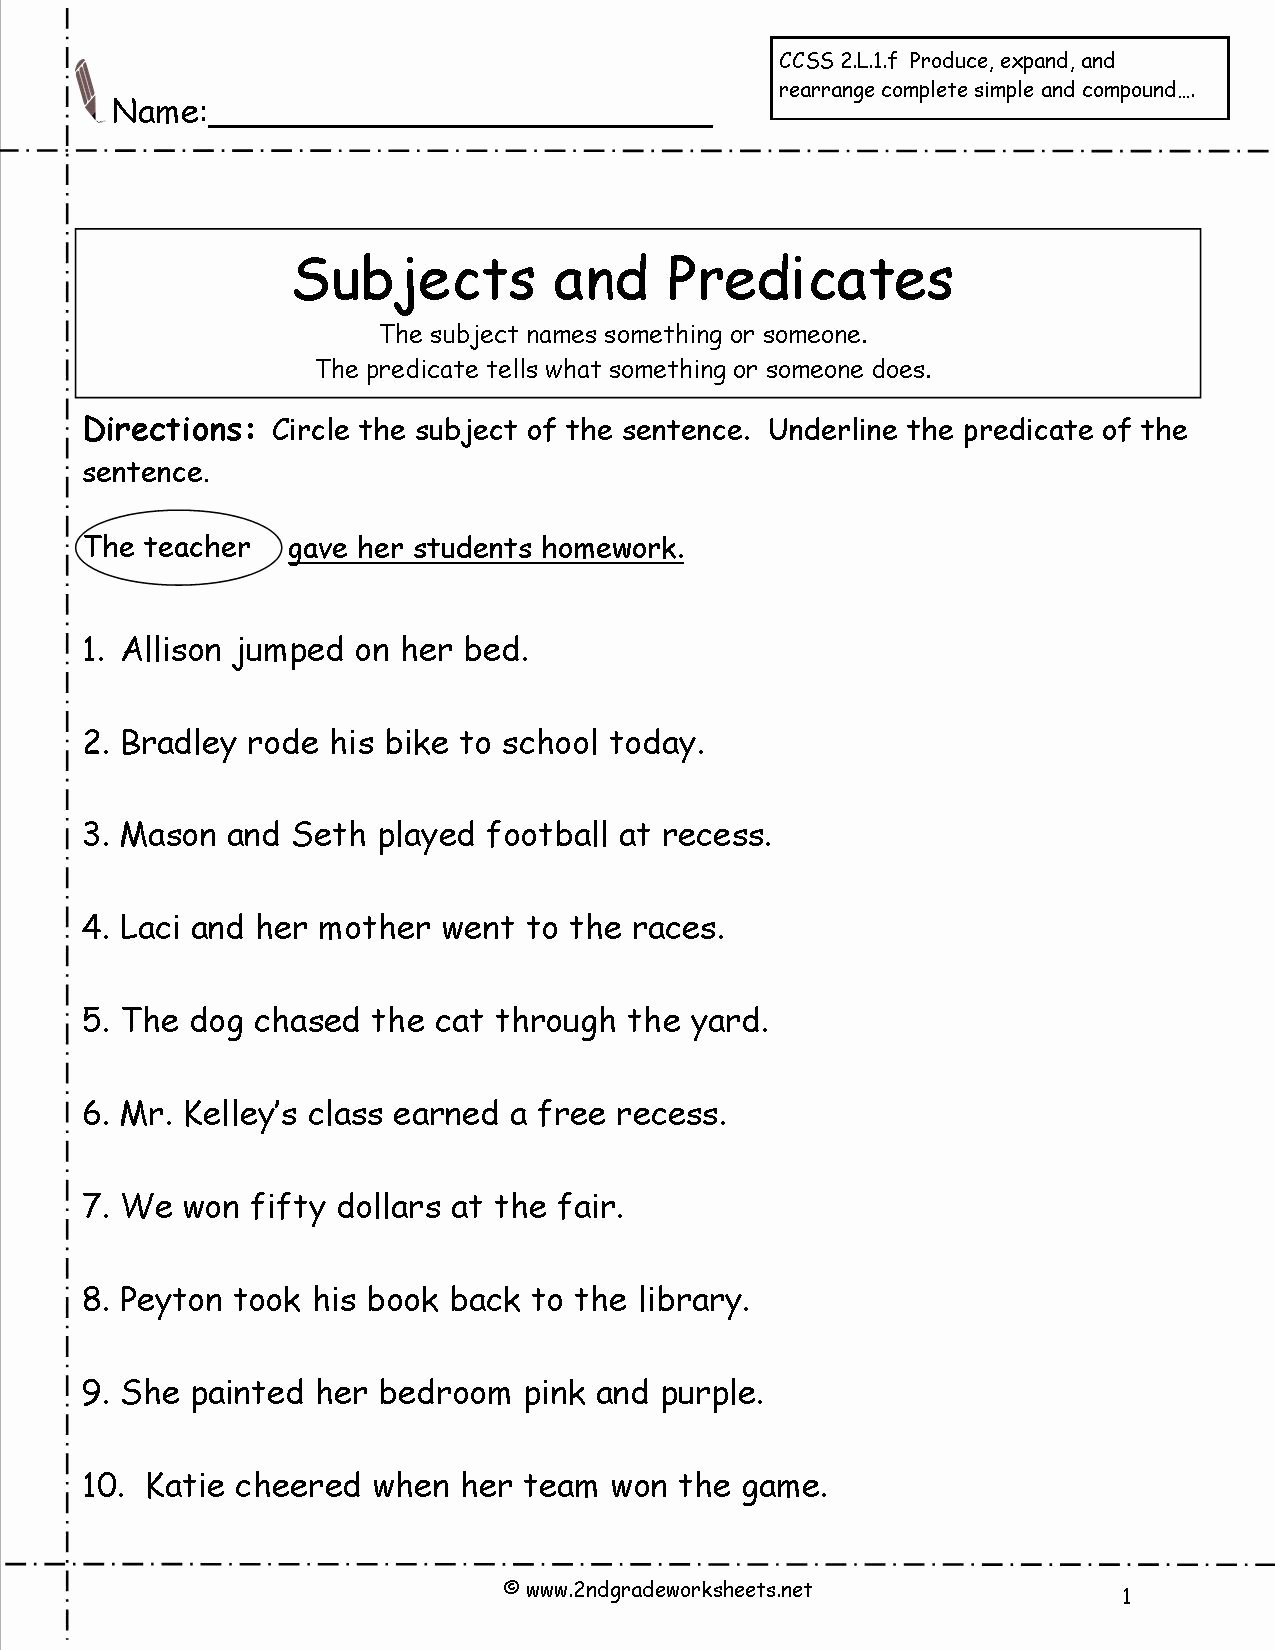 Complete Subject and Predicate Worksheet Elegant Second Grade Sentences Worksheets Ccss 2 L 1 F Worksheets